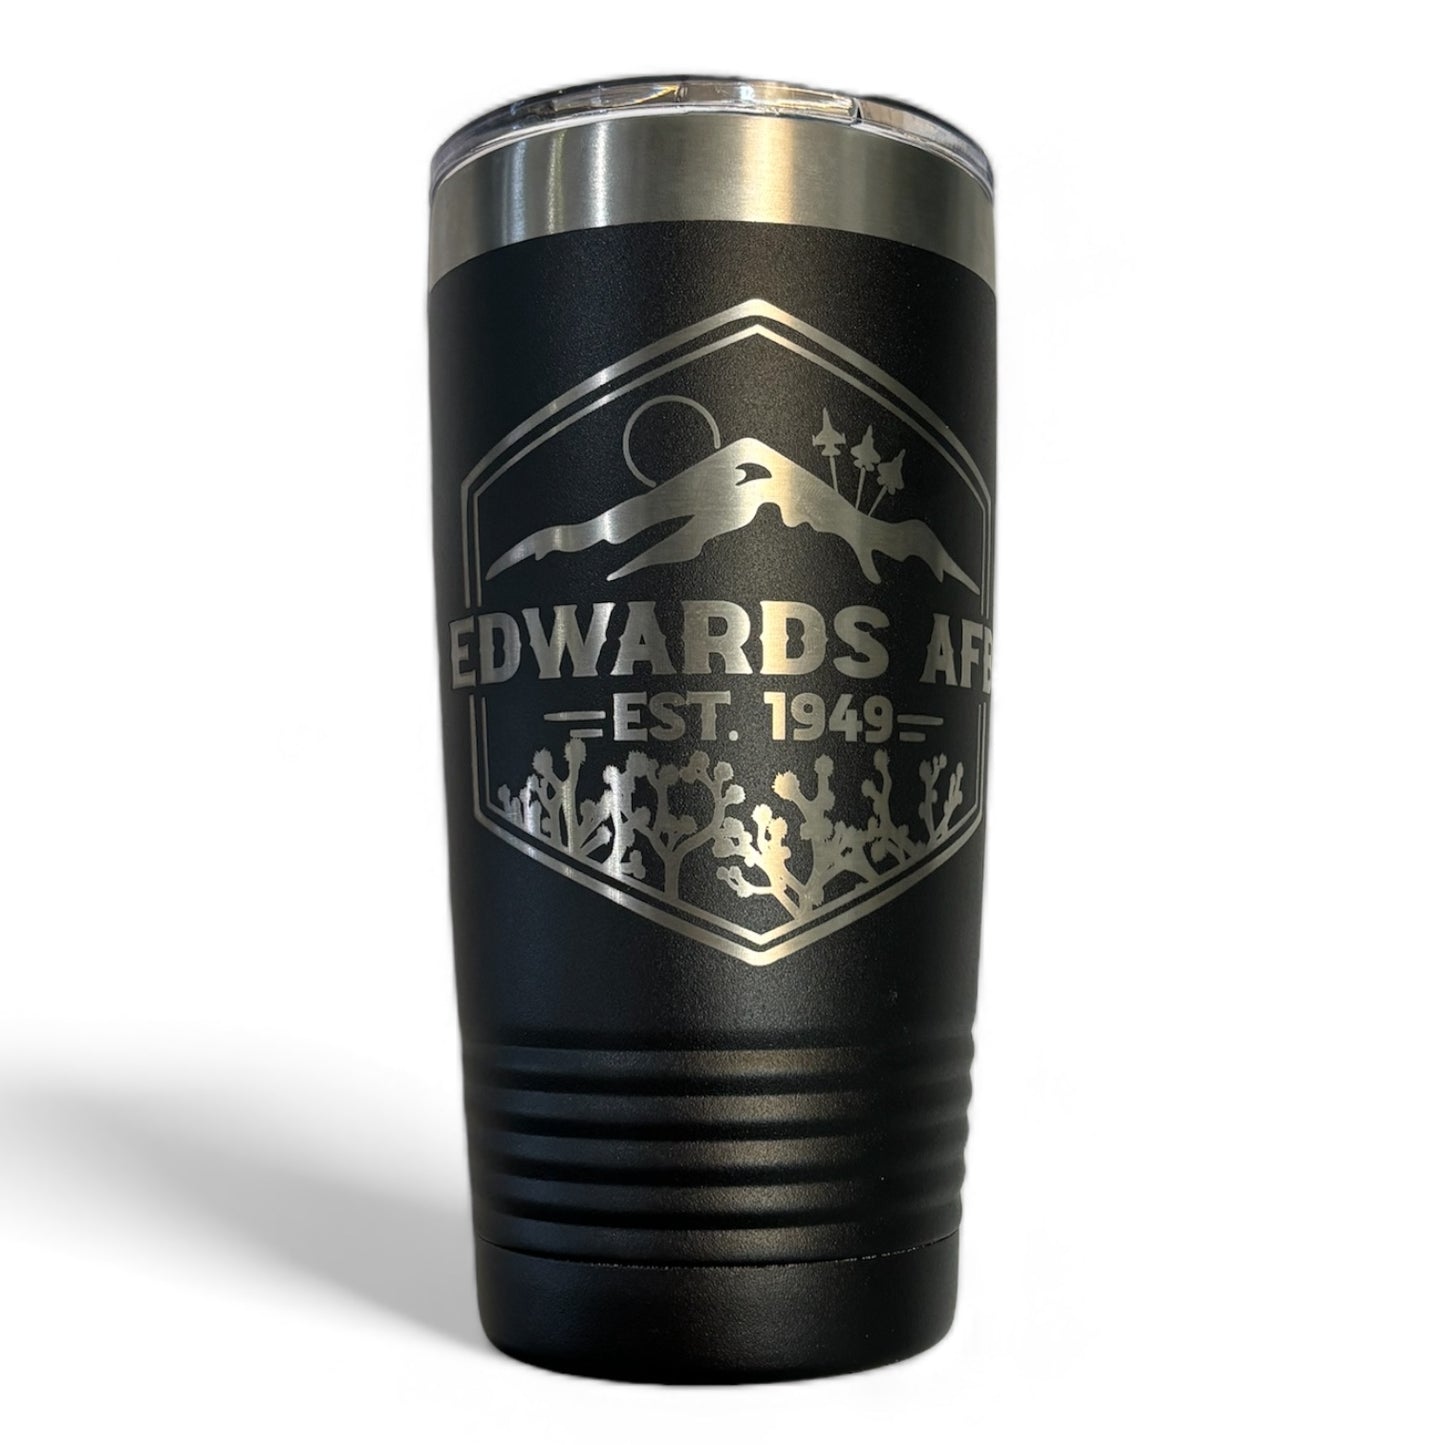 Edwards Hexagon Badge Coffee Mug